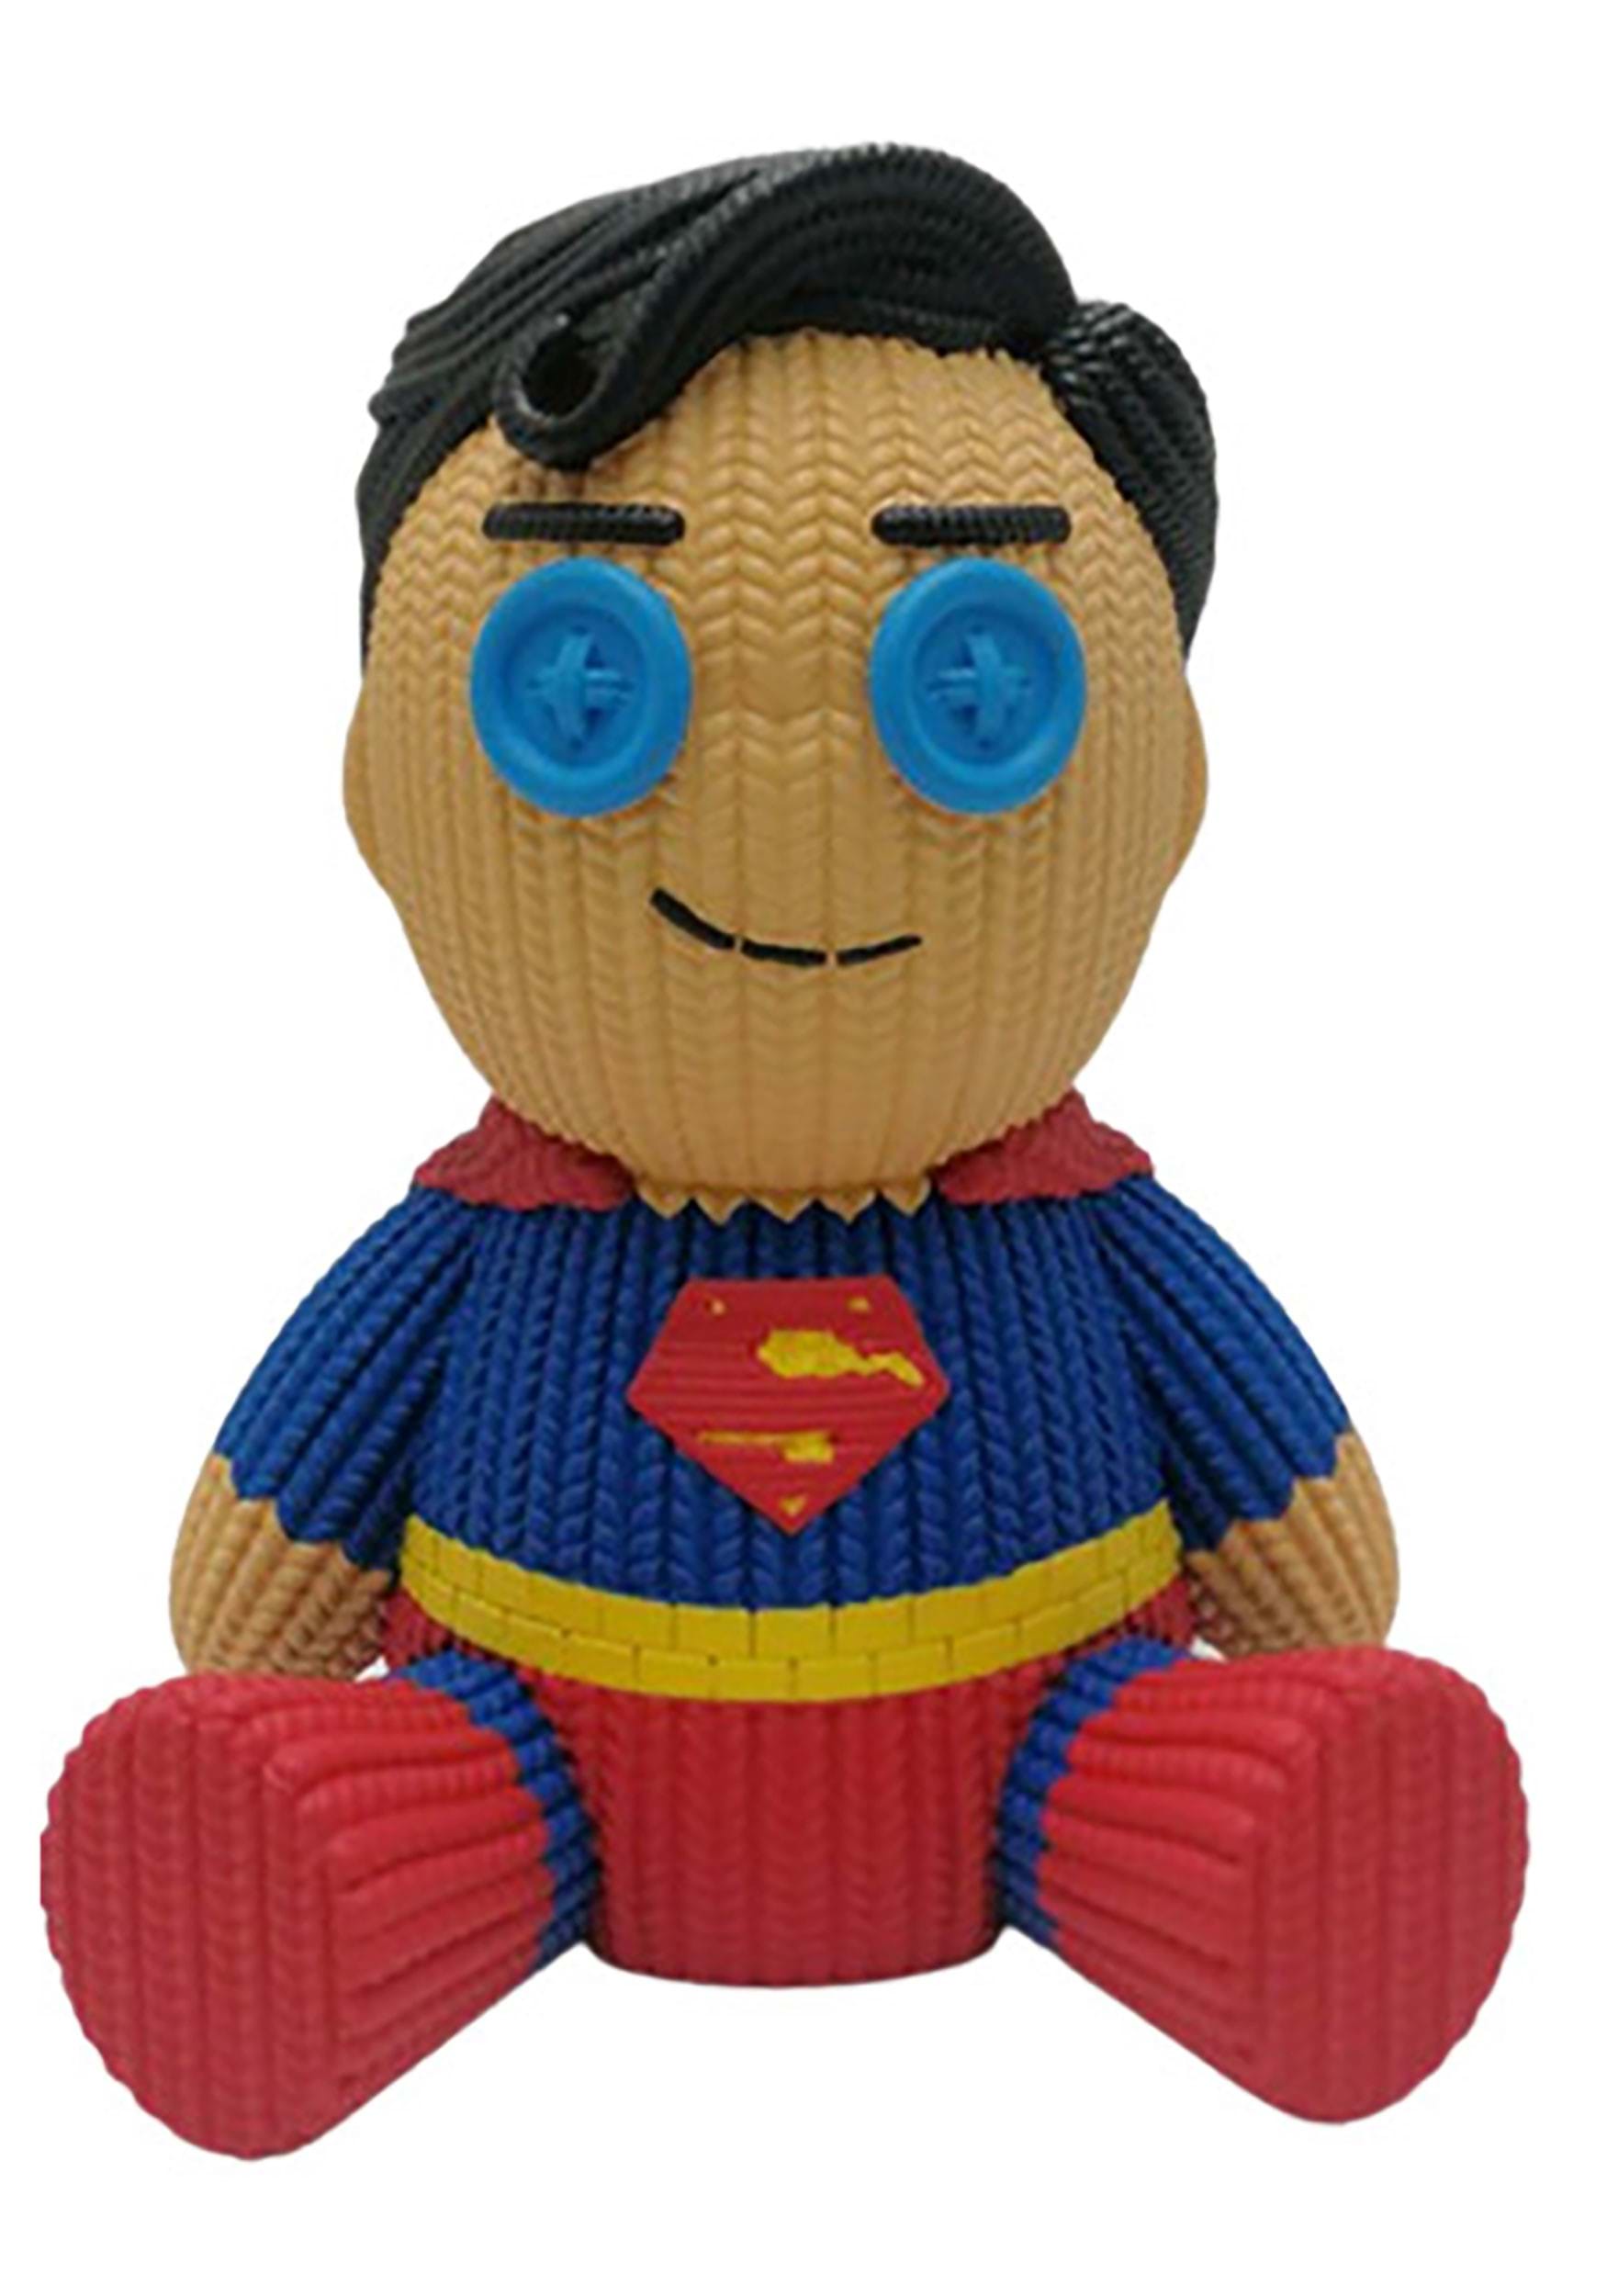 Superman Handmade by Robots Figure